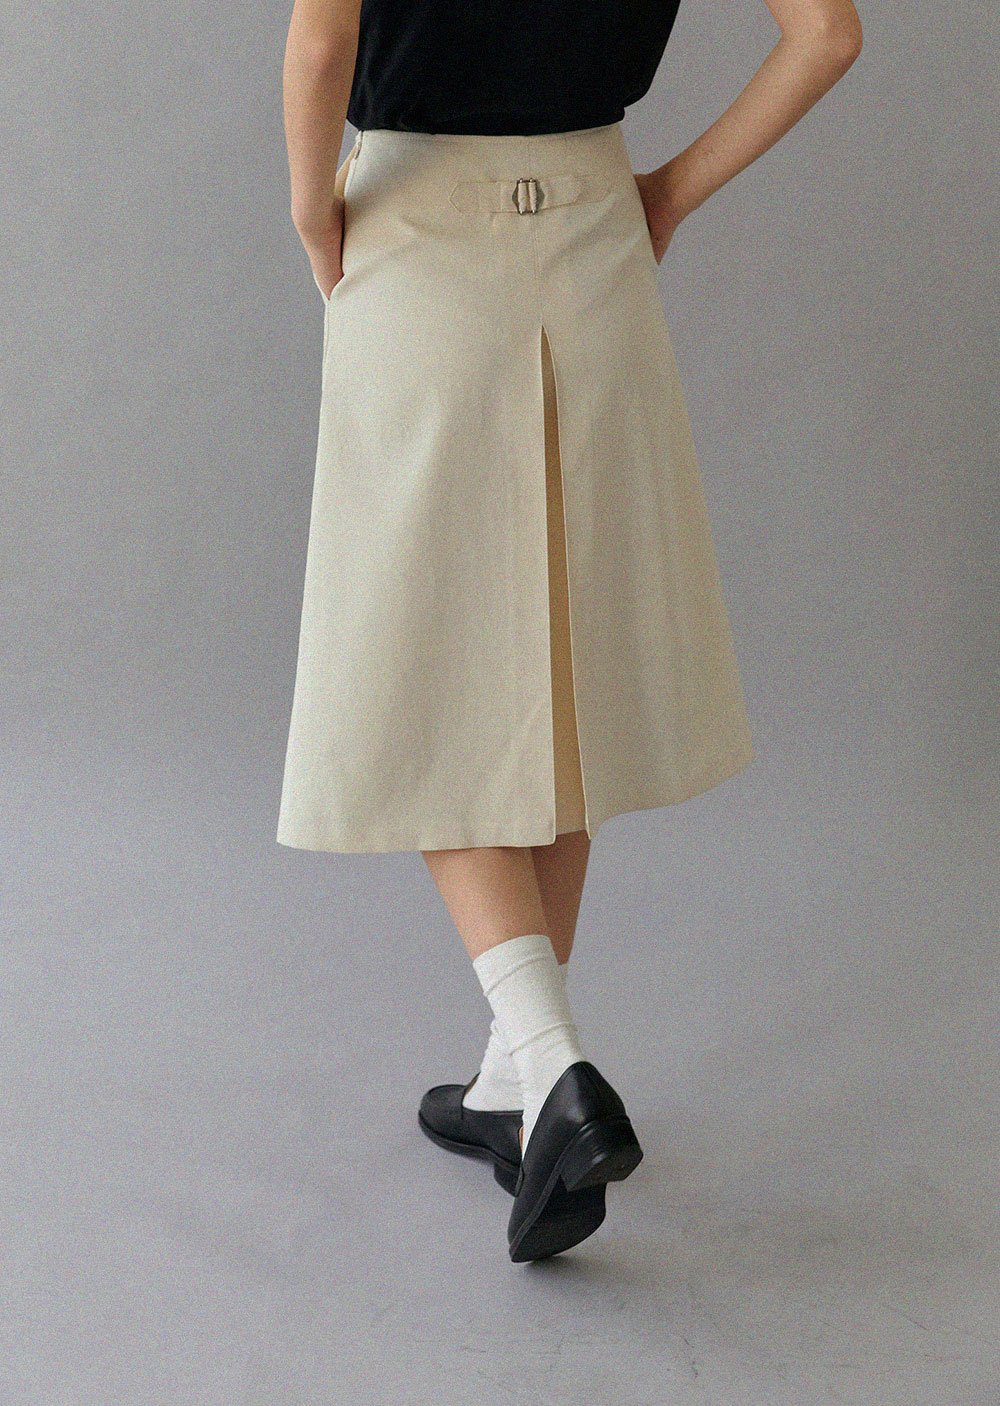 buckle midi skirt (cream)